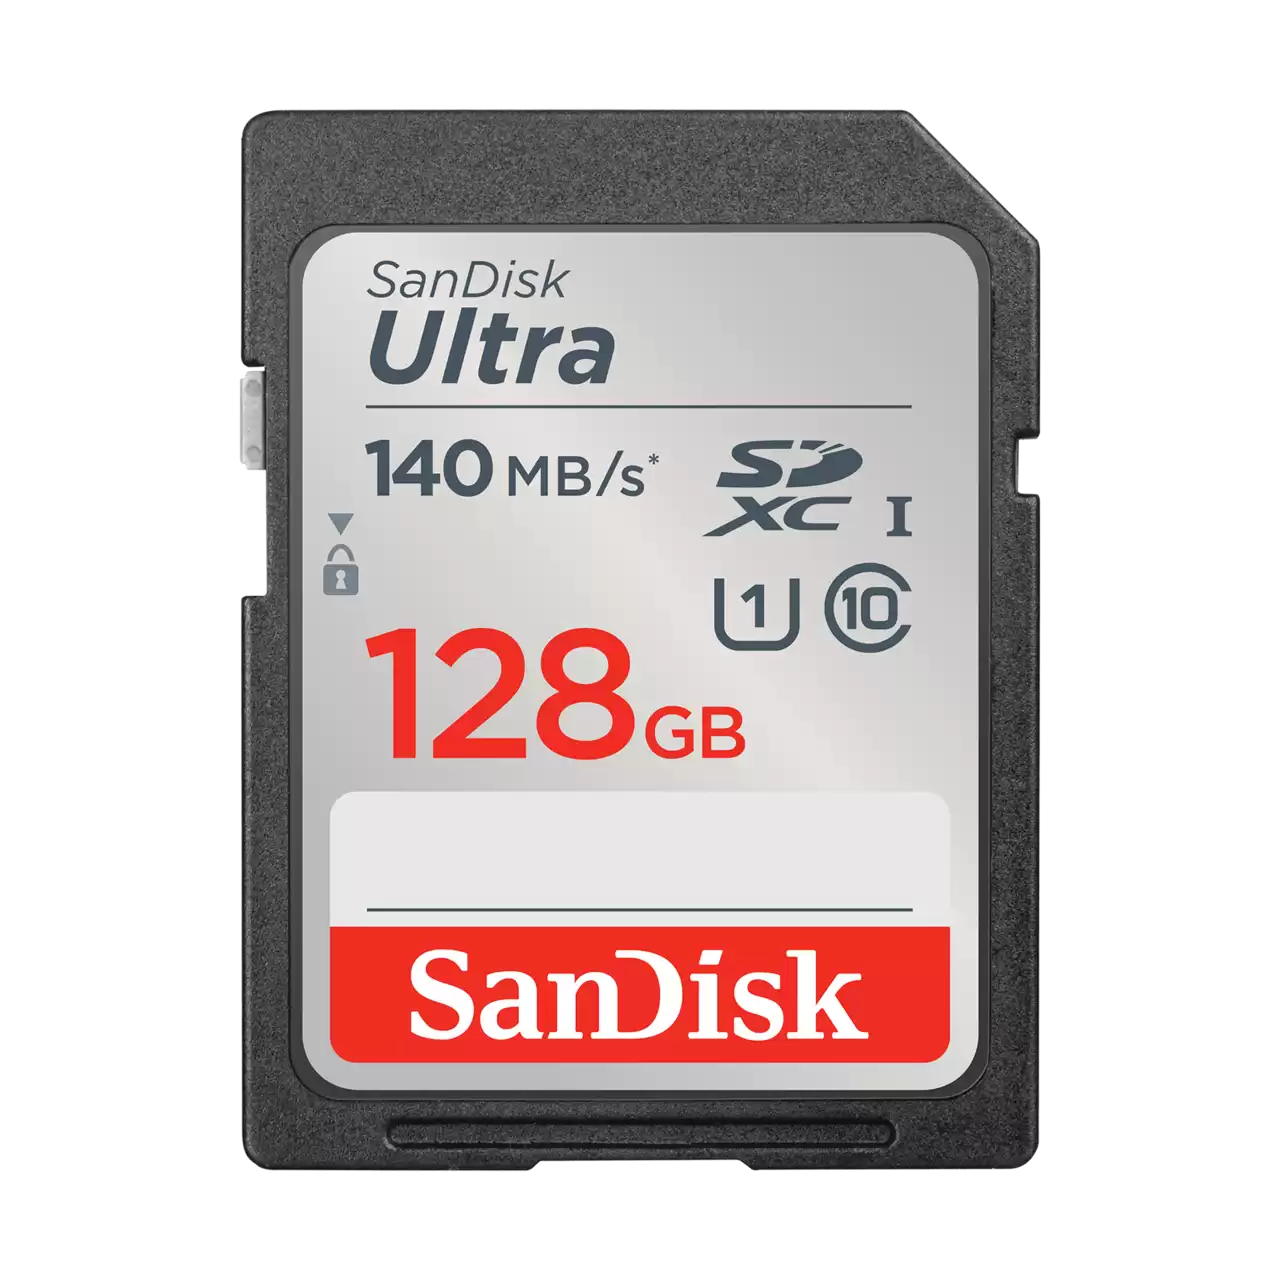 Sandisk Ultra SDXC UHS-I